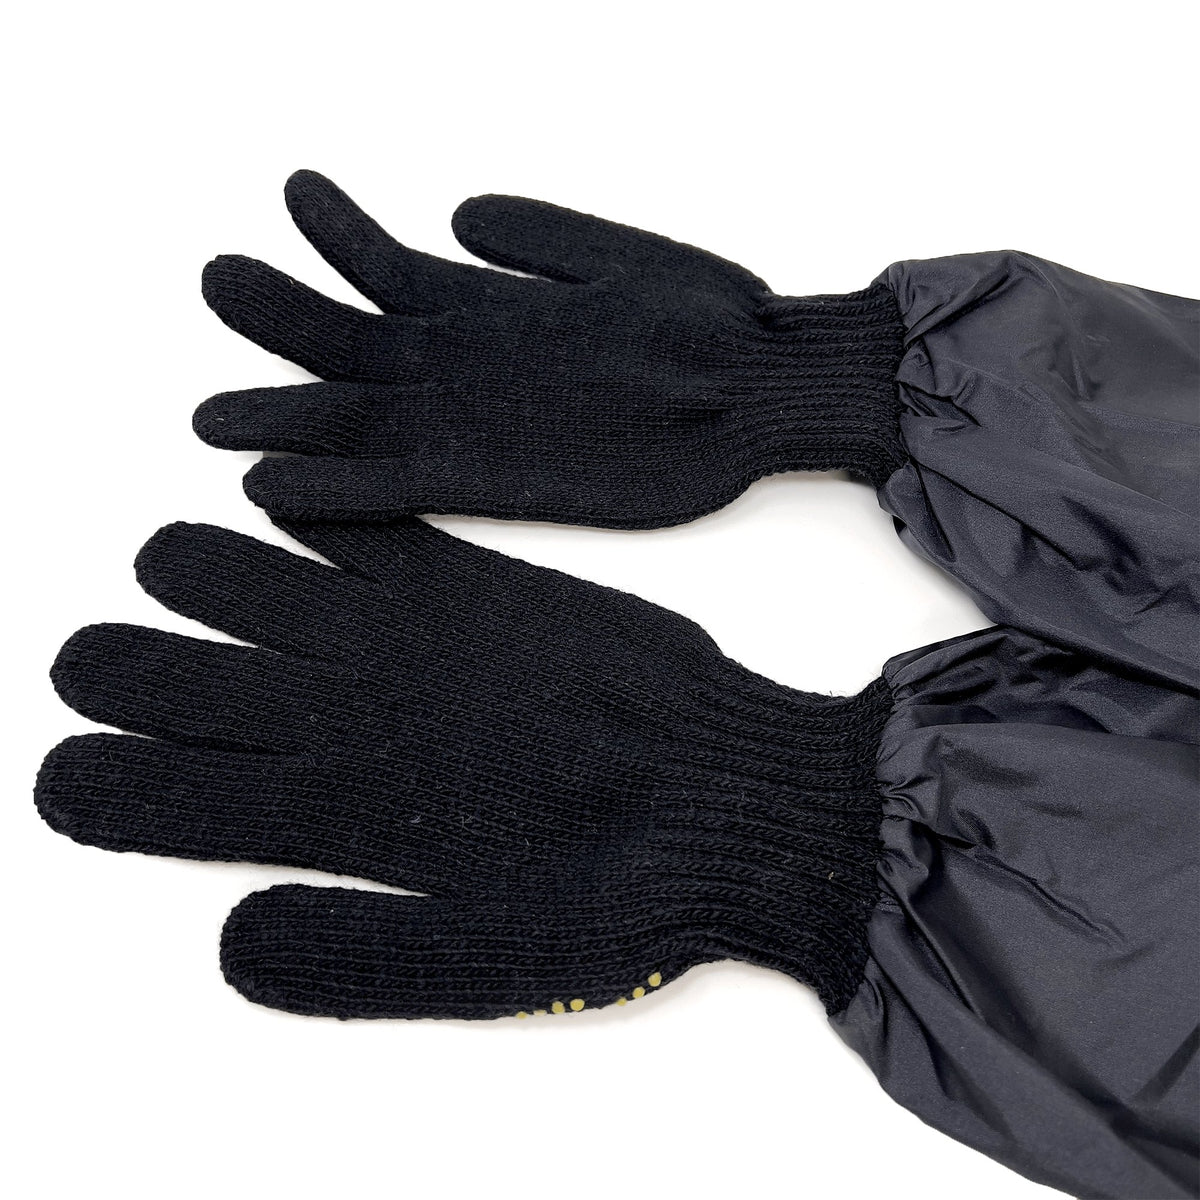 JDM Japan Super Autobacs Mechanic Cold Weather Rain Long Sleeve Working Gloves - Sugoi JDM